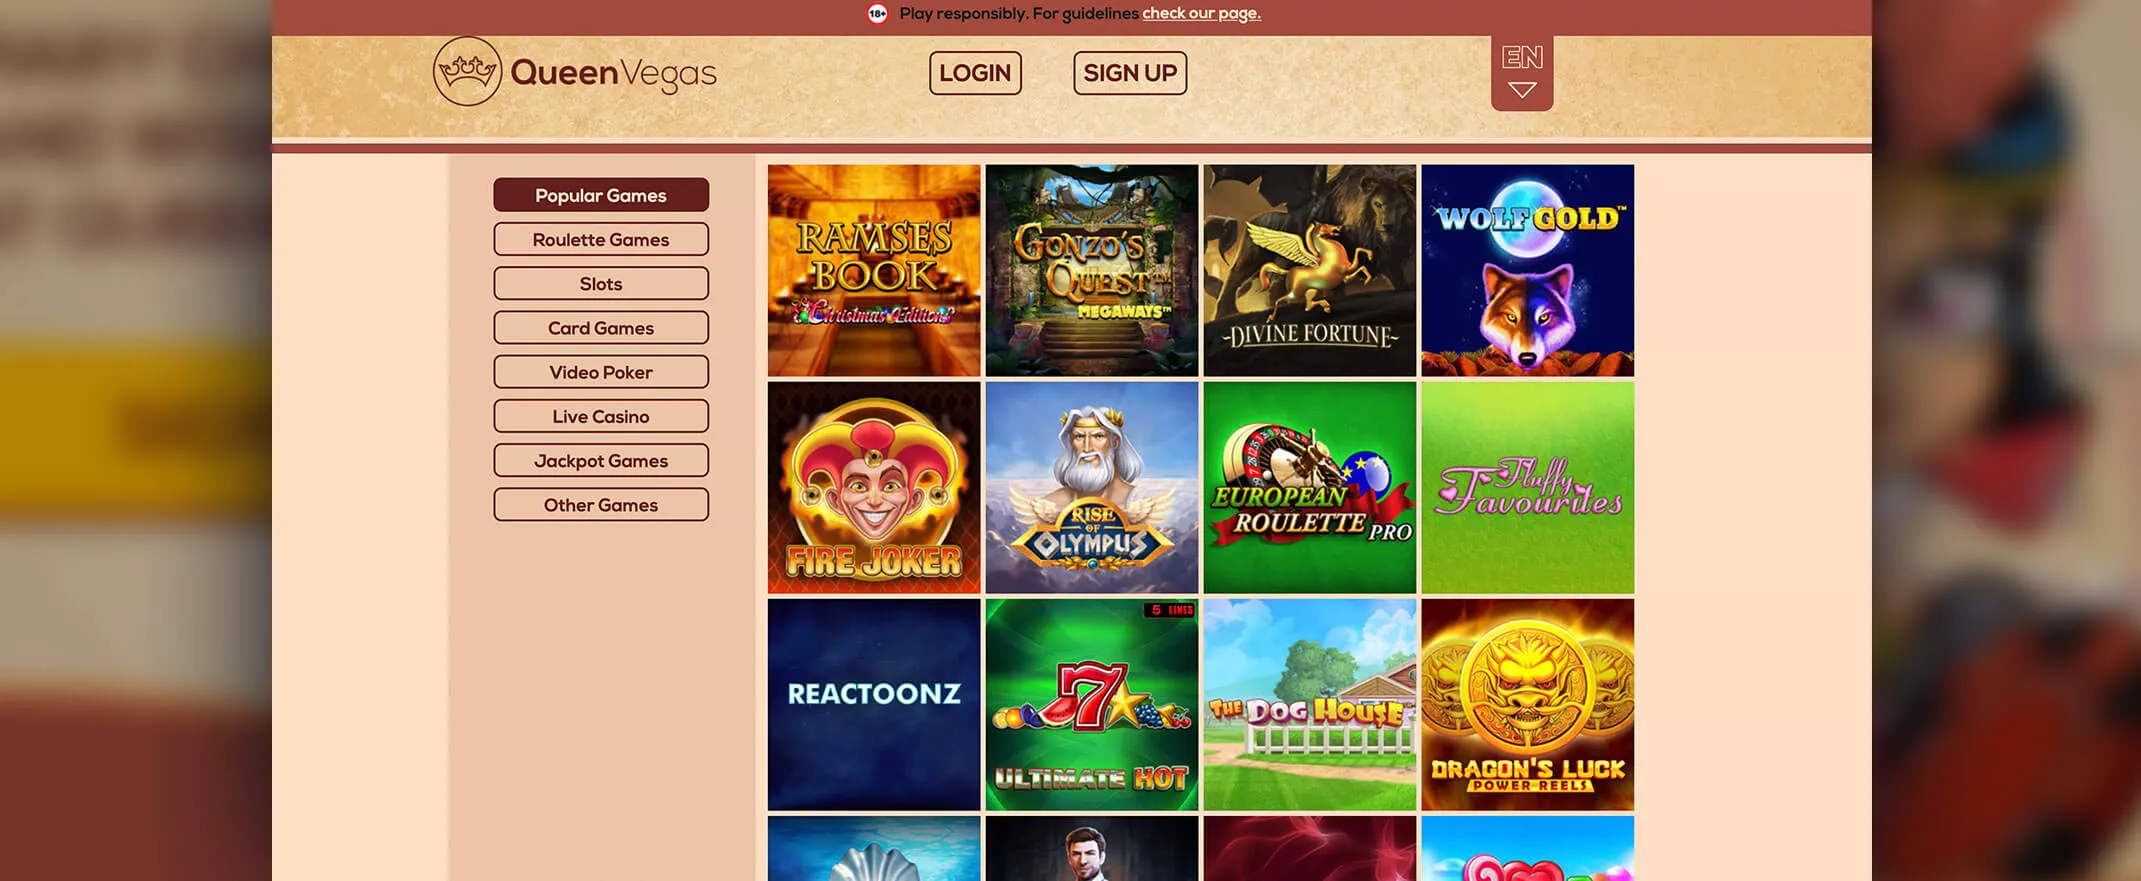 Queen Vegas Casino screenshot of the games